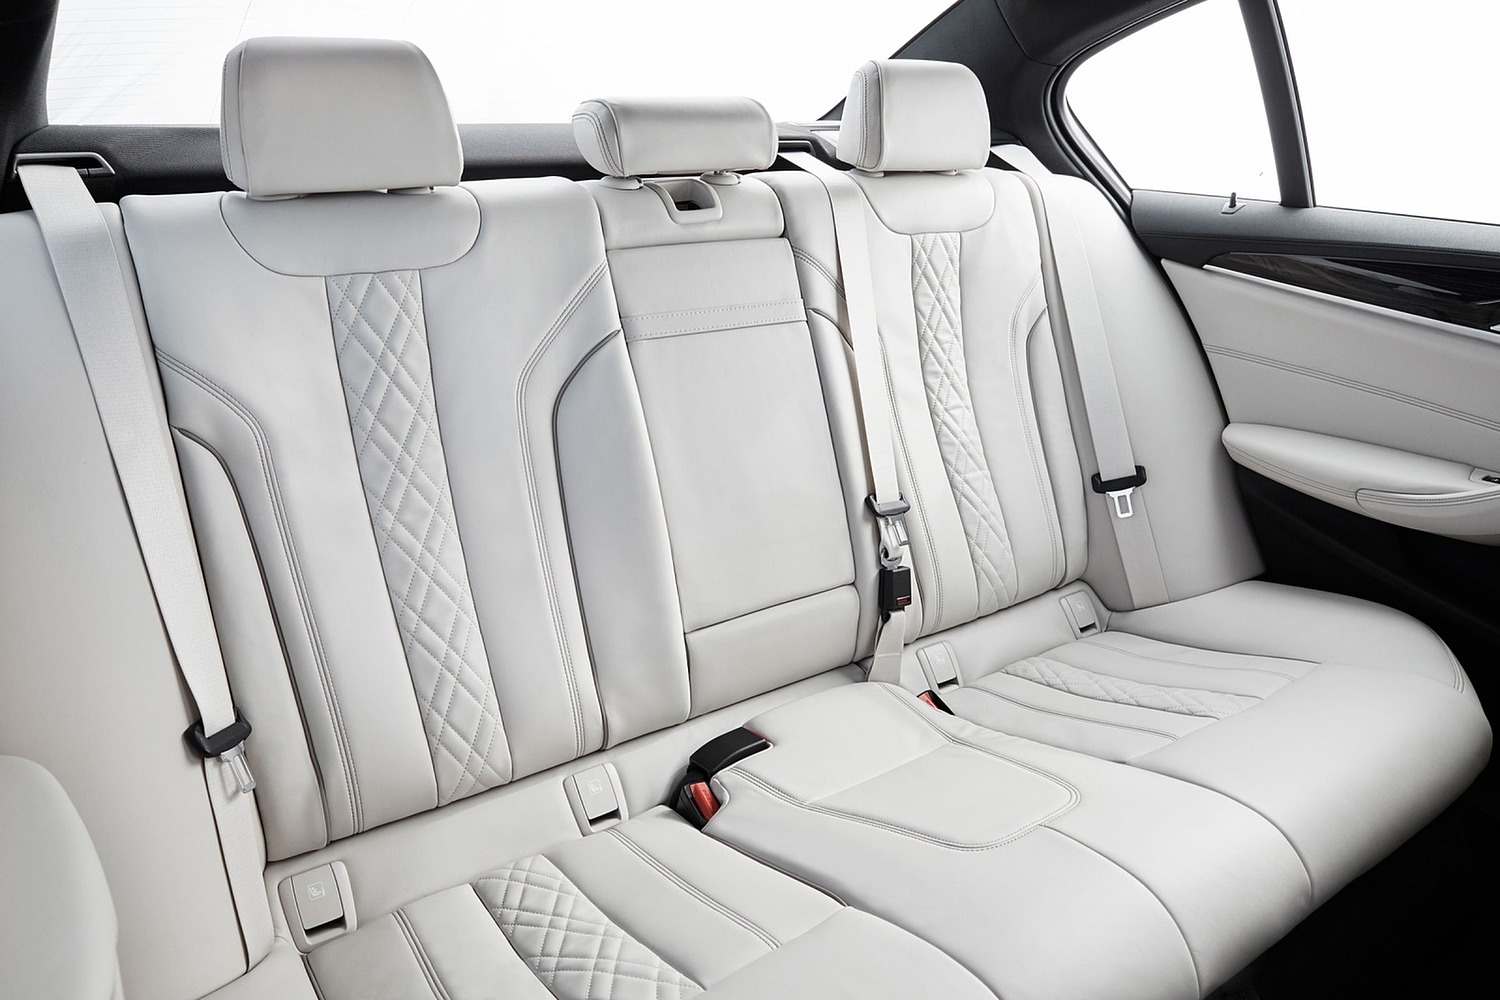 BMW 5 Series 540i Sedan Rear Interior (2017 model year shown)